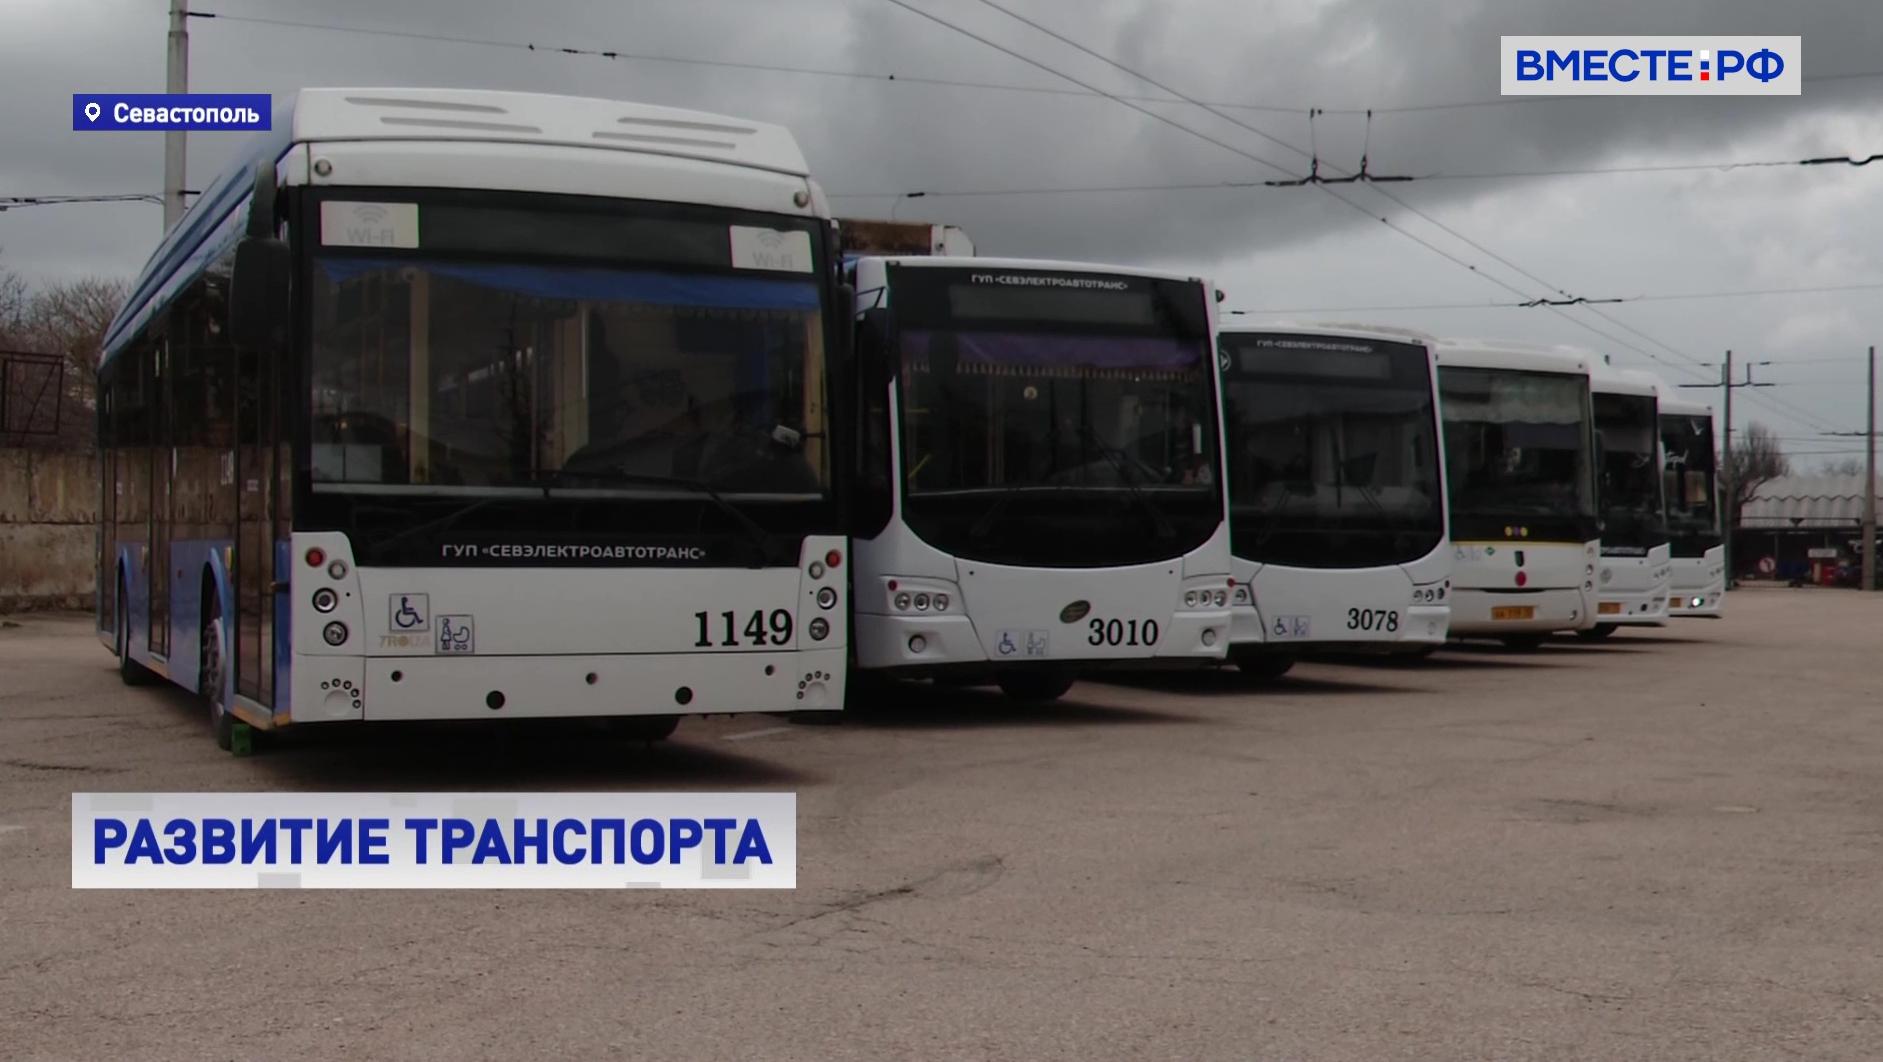 РЕПОРТАЖ: Развитие транспорта в Севастополе